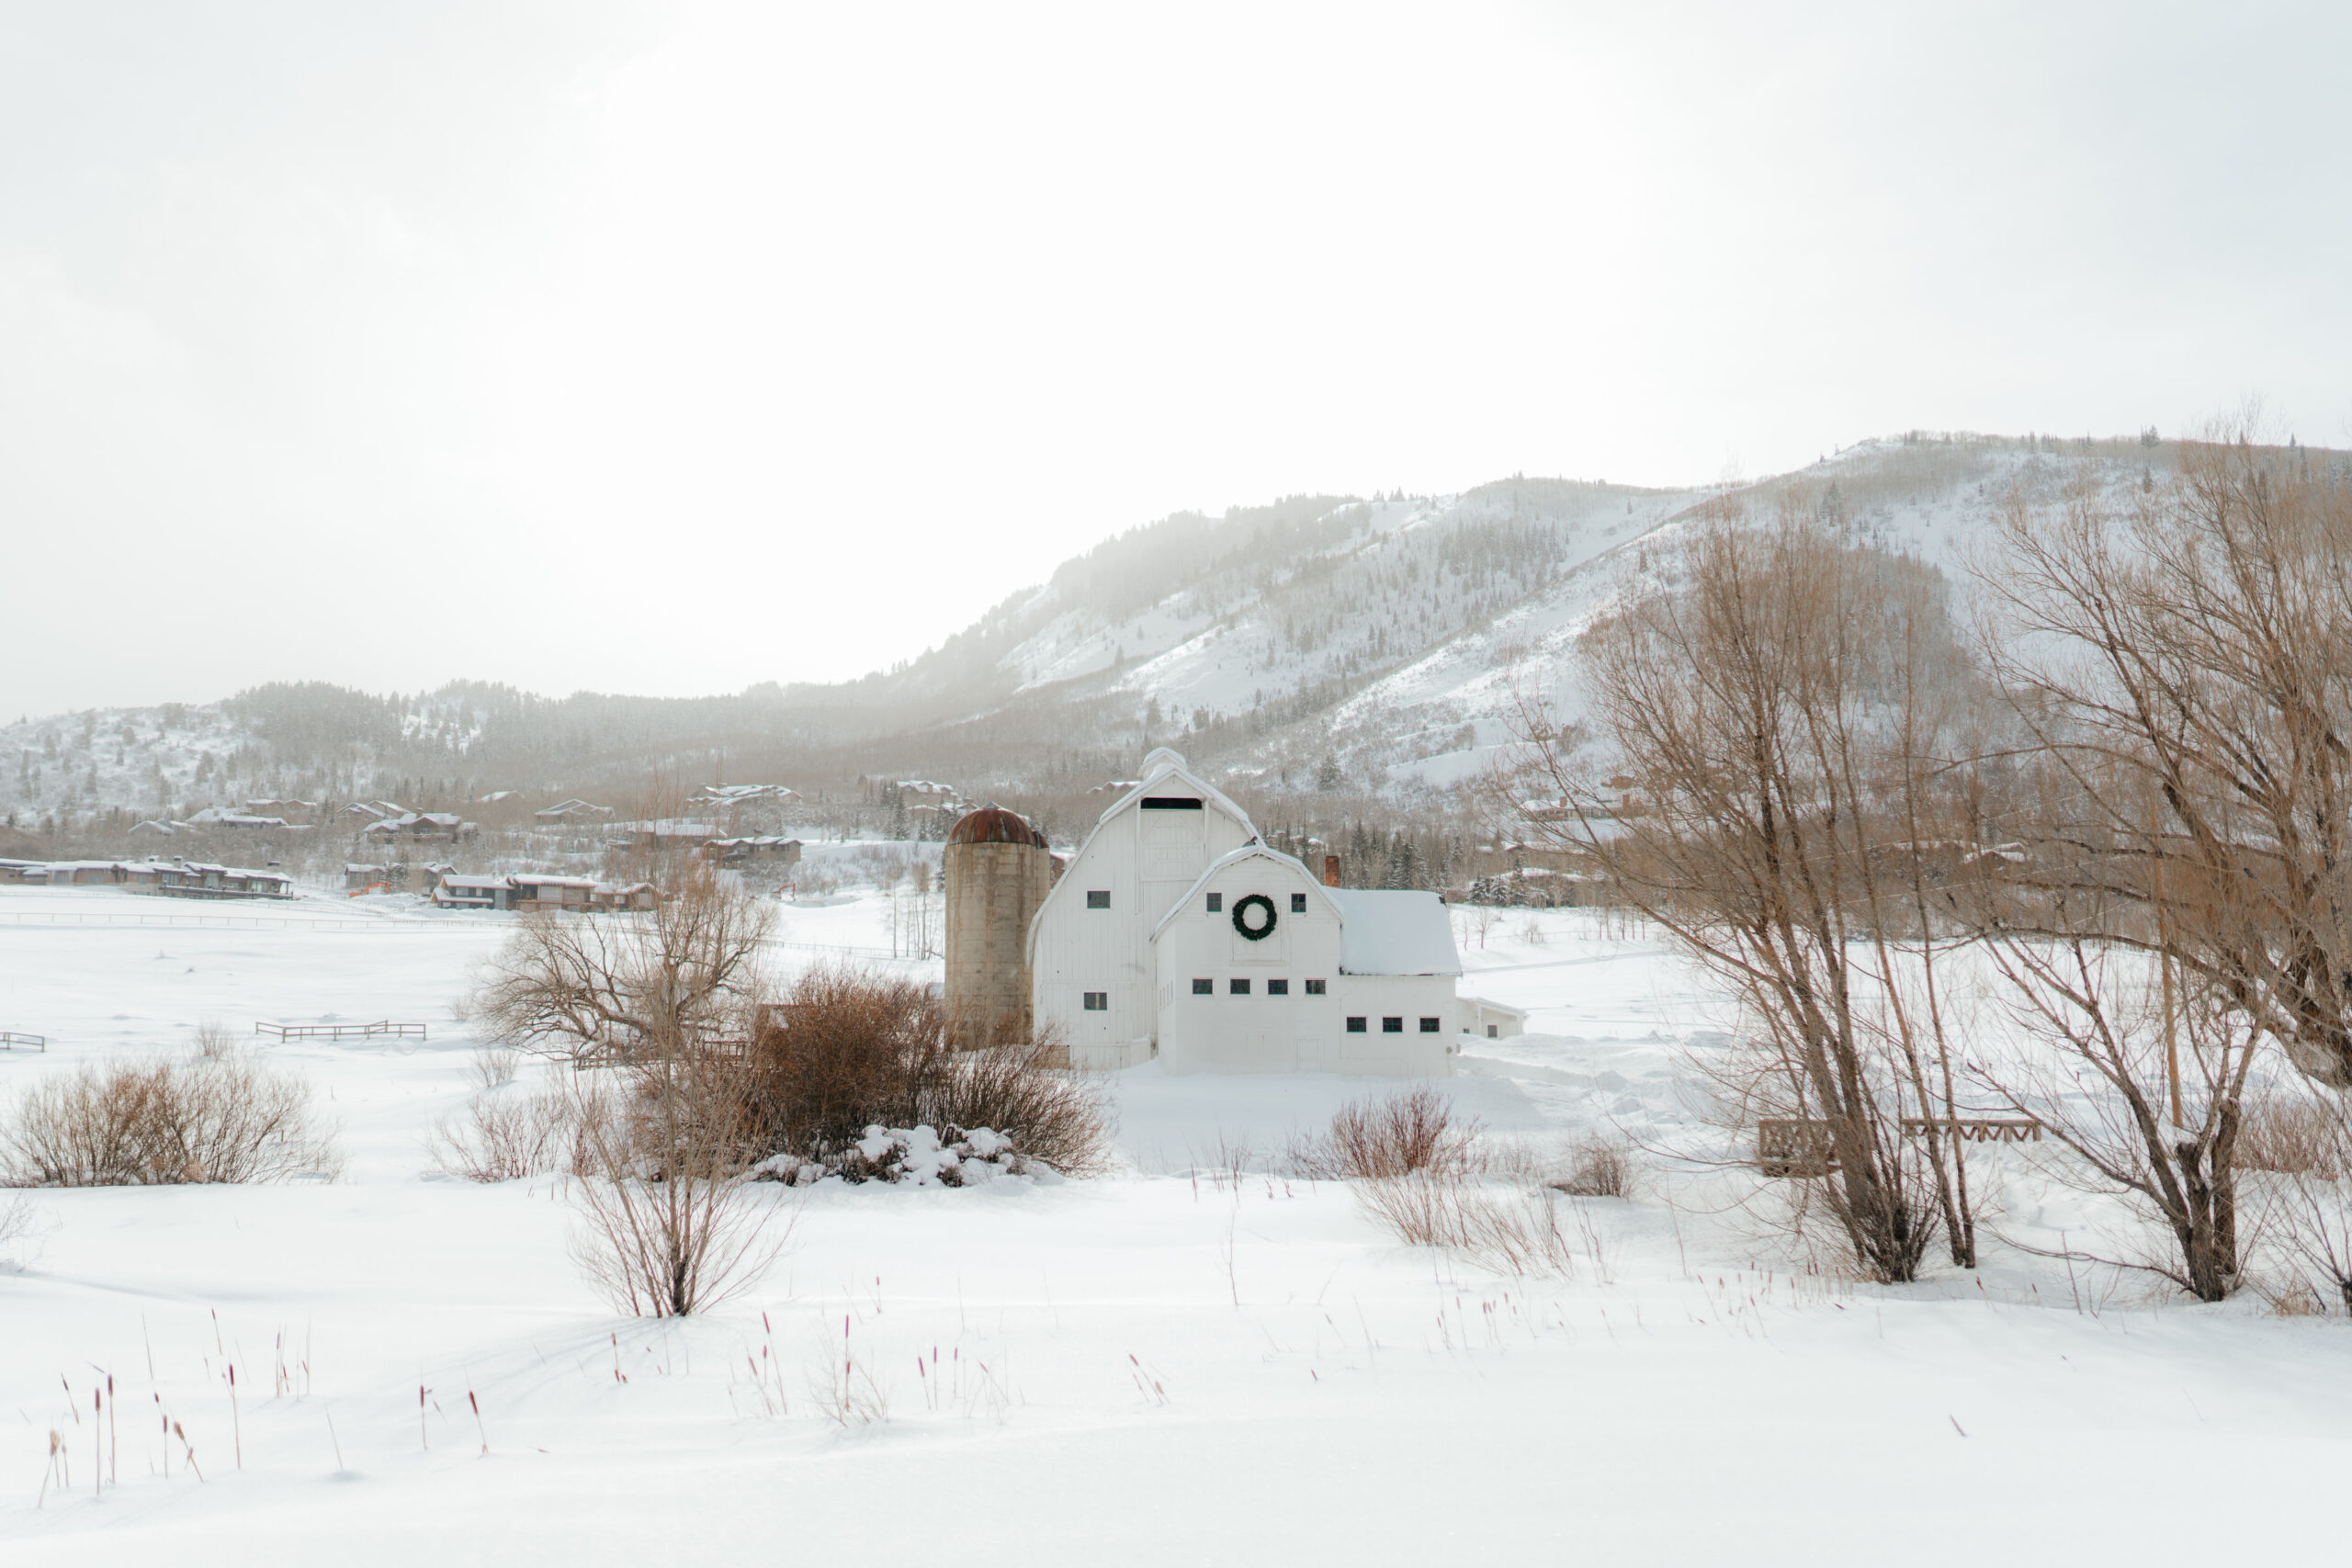 McPolin Farm in a snowy landscape in Park City, Utah